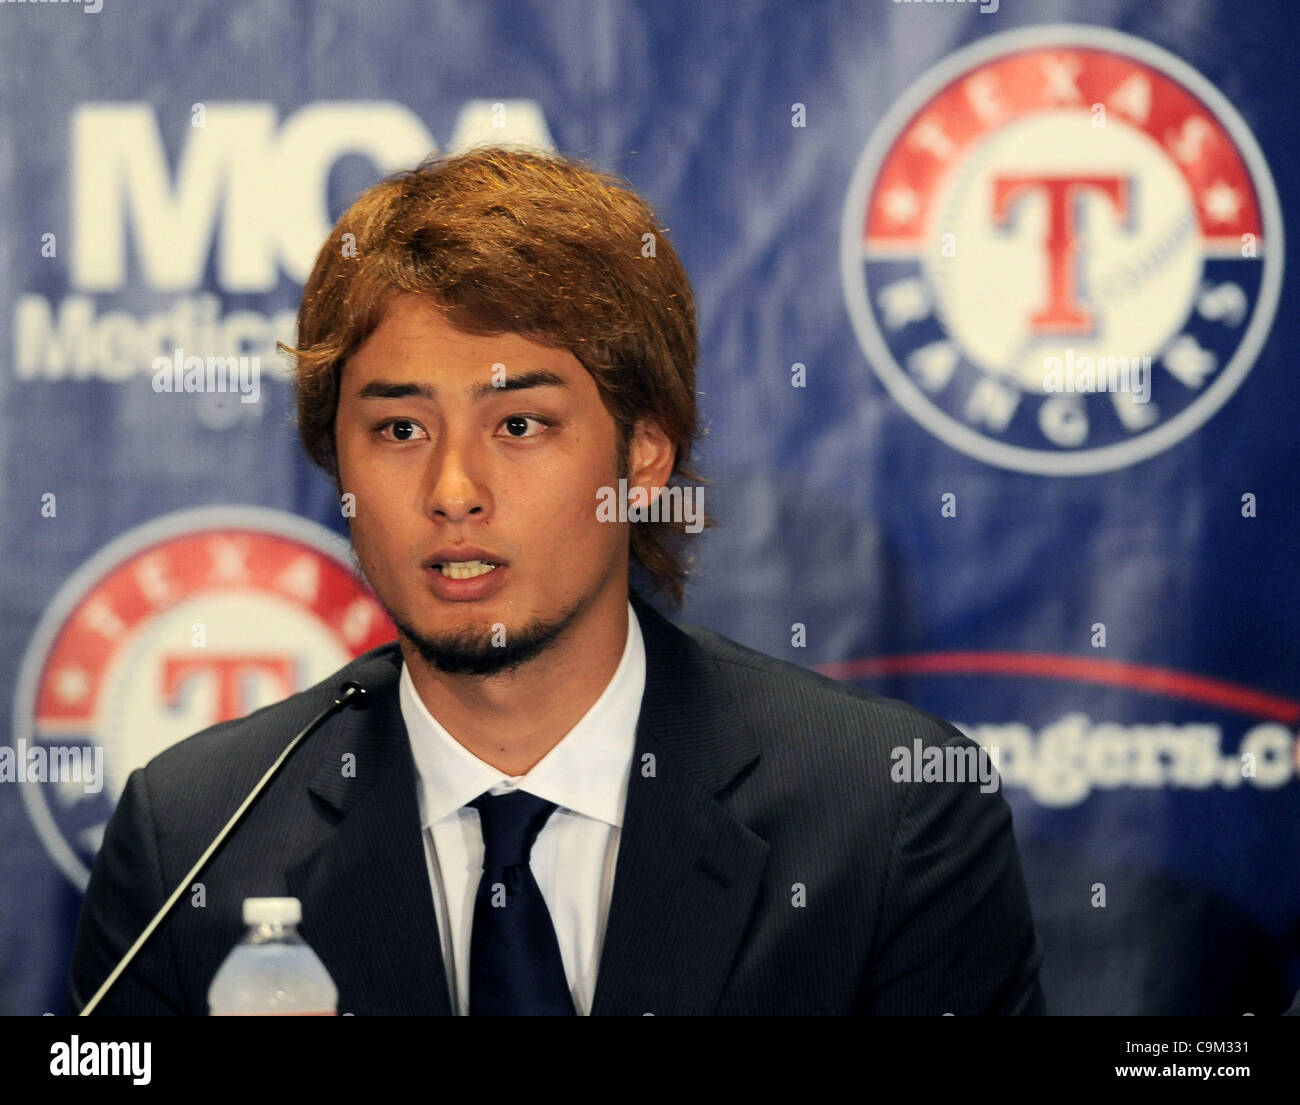 Japanese star Yu Darvish signs with Rangers (updated) - Beckett News